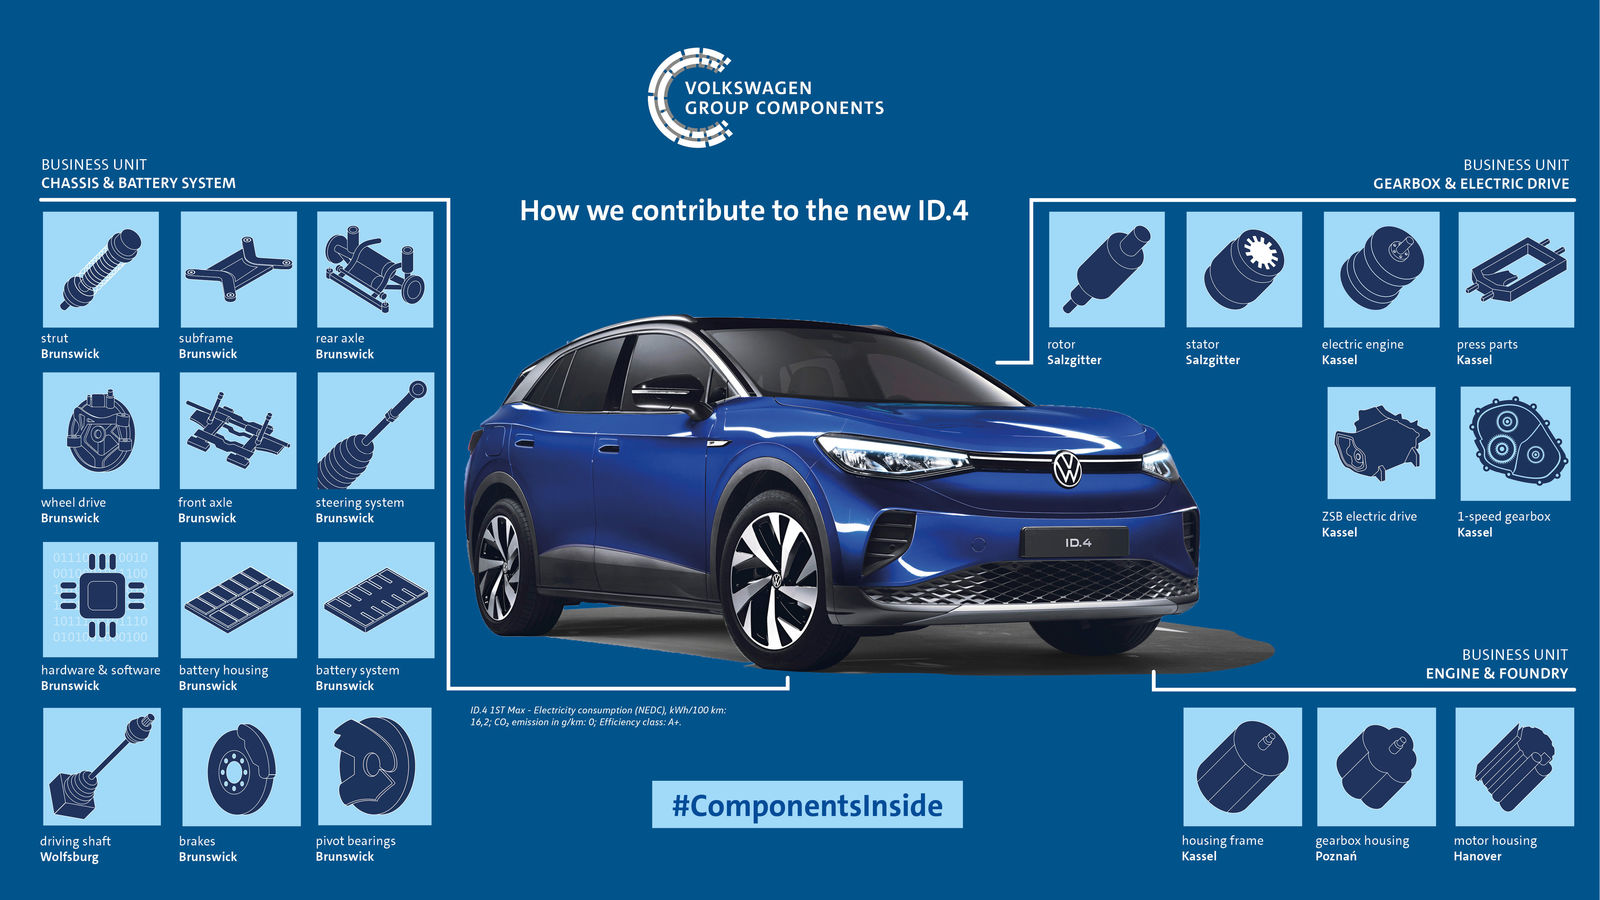 Volkswagen Group Components delivers essential components for Volkswagen’s ID.4